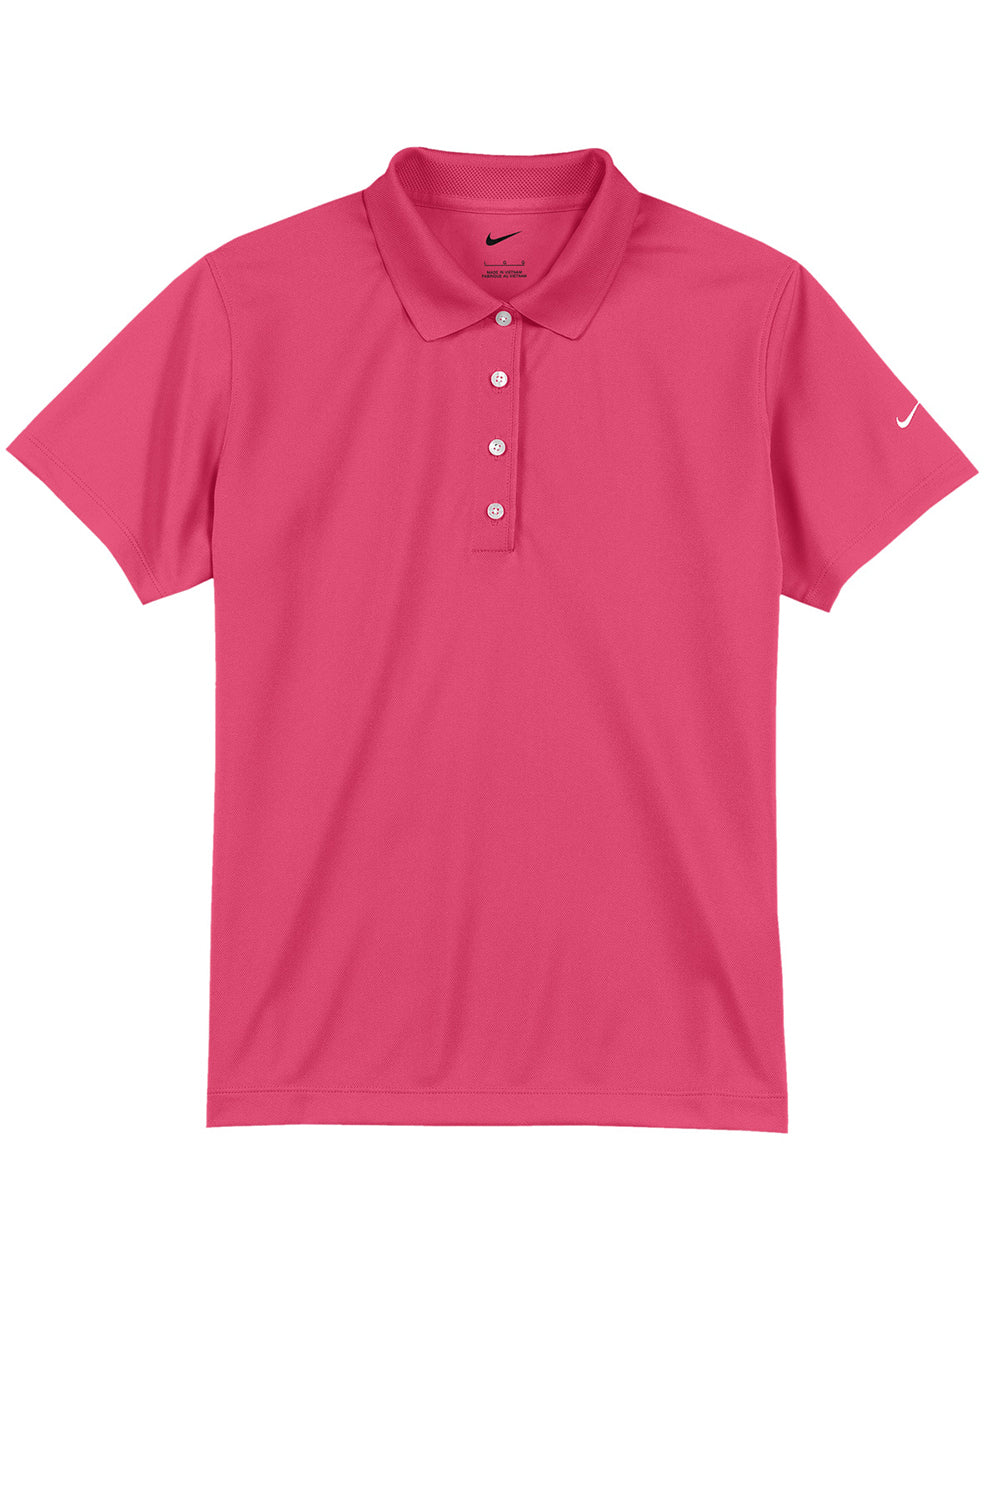 Nike 203697 Womens Tech Basic Dri-Fit Moisture Wicking Short Sleeve Polo Shirt Flamingo Pink Flat Front